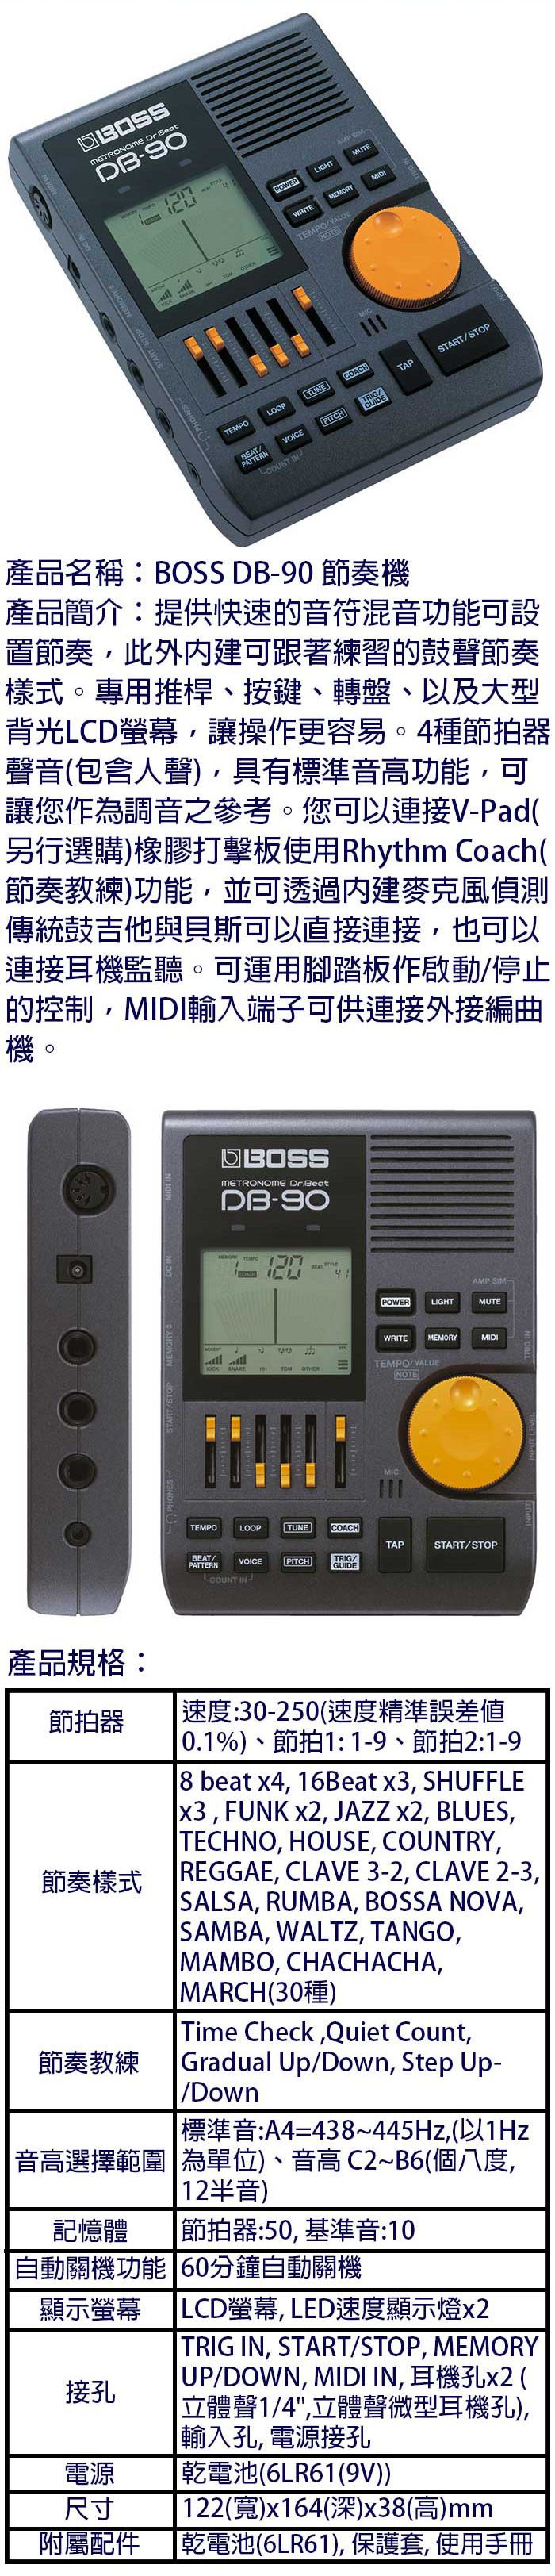 BOSS DB-90 節奏機